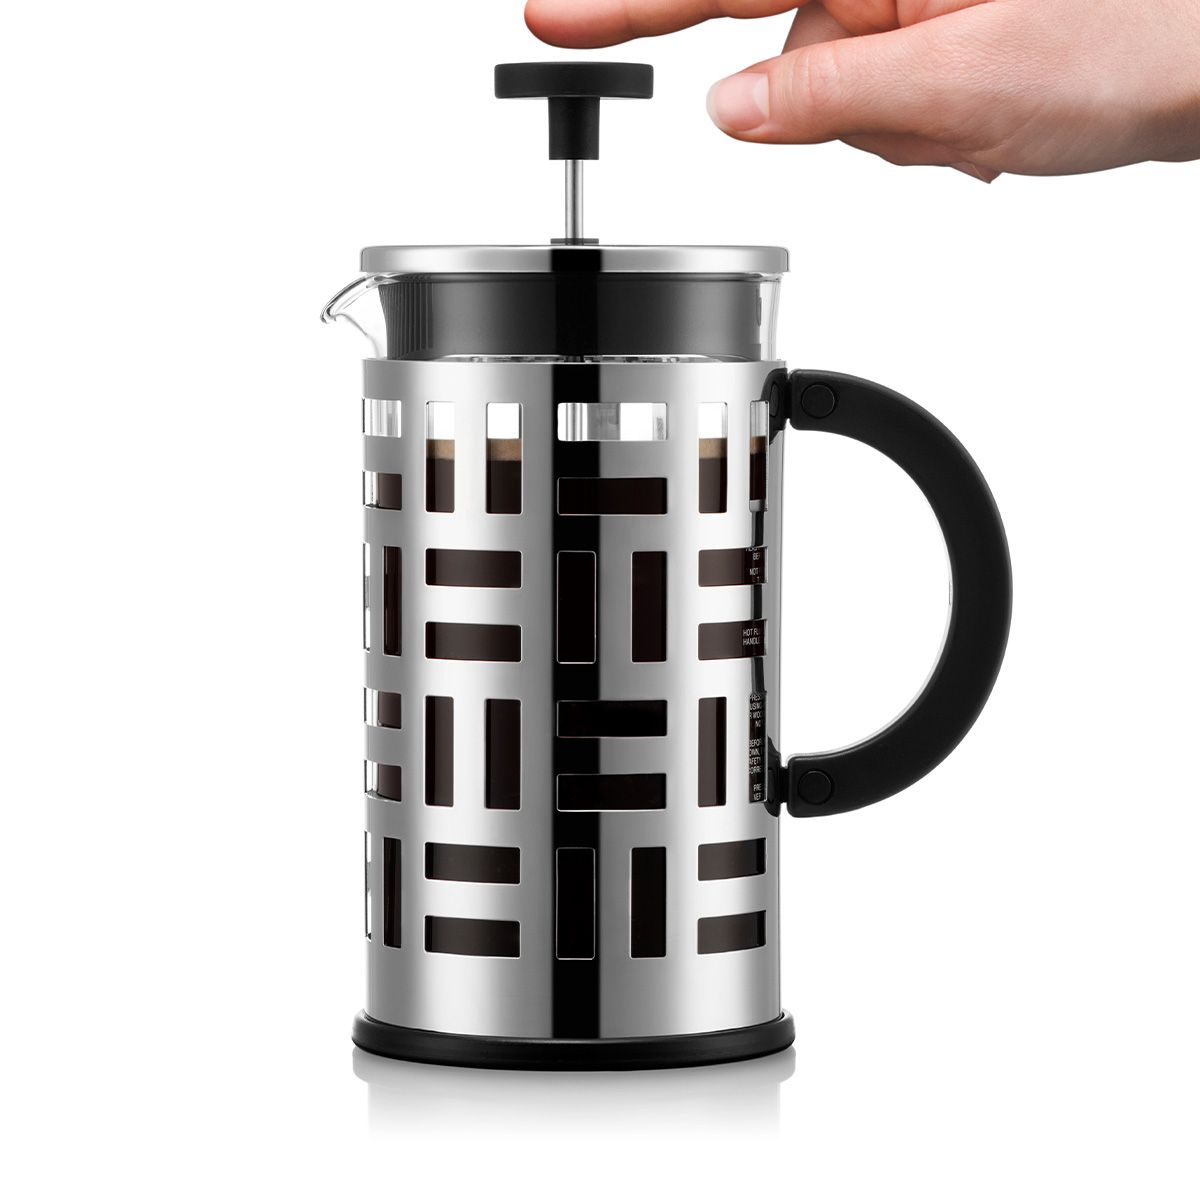 Bodum Eileen French Press coffee maker 3 cup 12 oz - Shiny